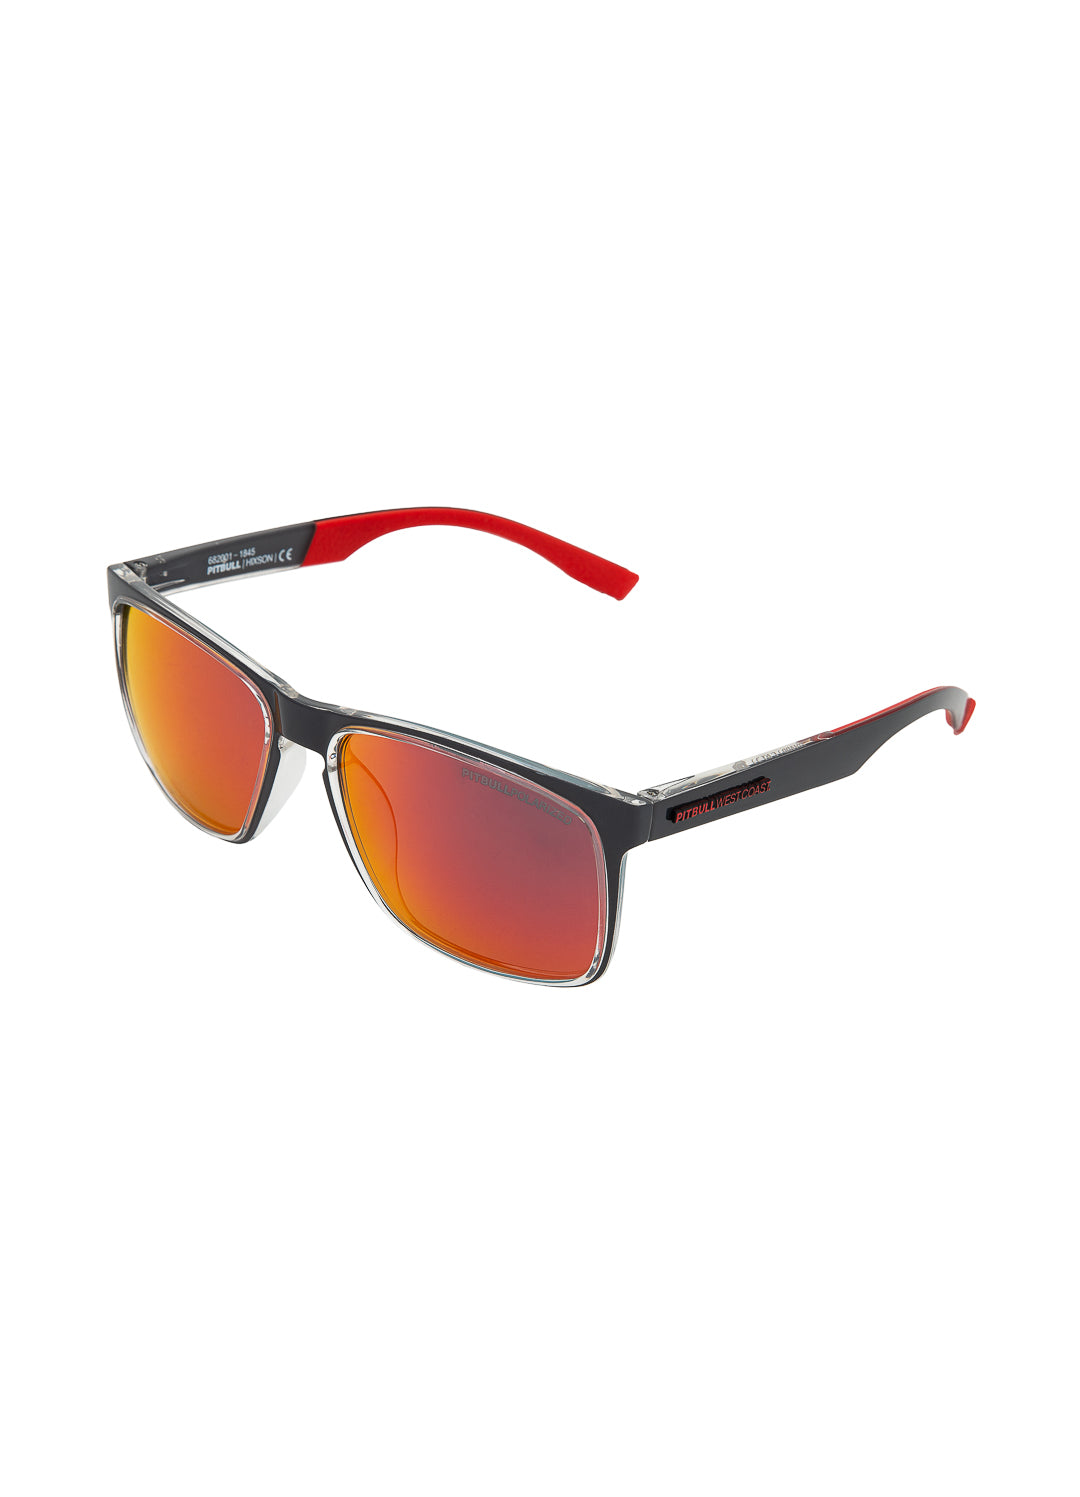 Sunglasses Grey/Red HIXSON.